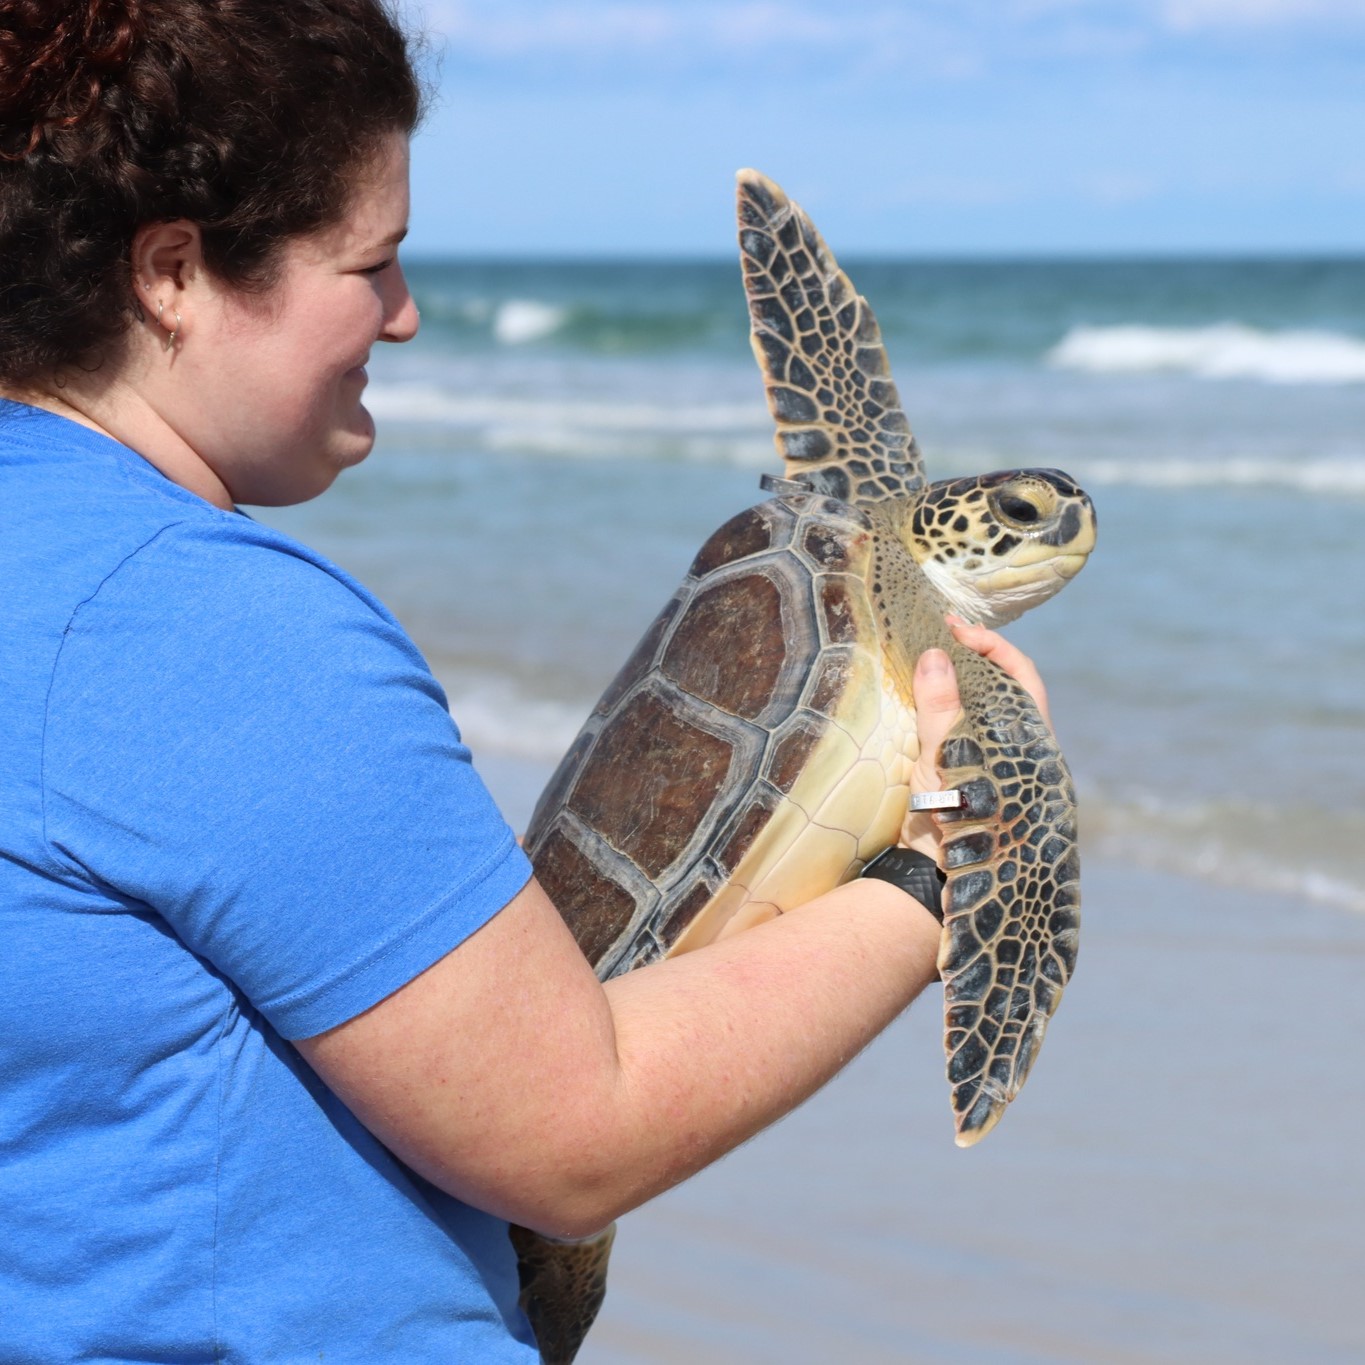 Woman releasing sea turtle into the ocean